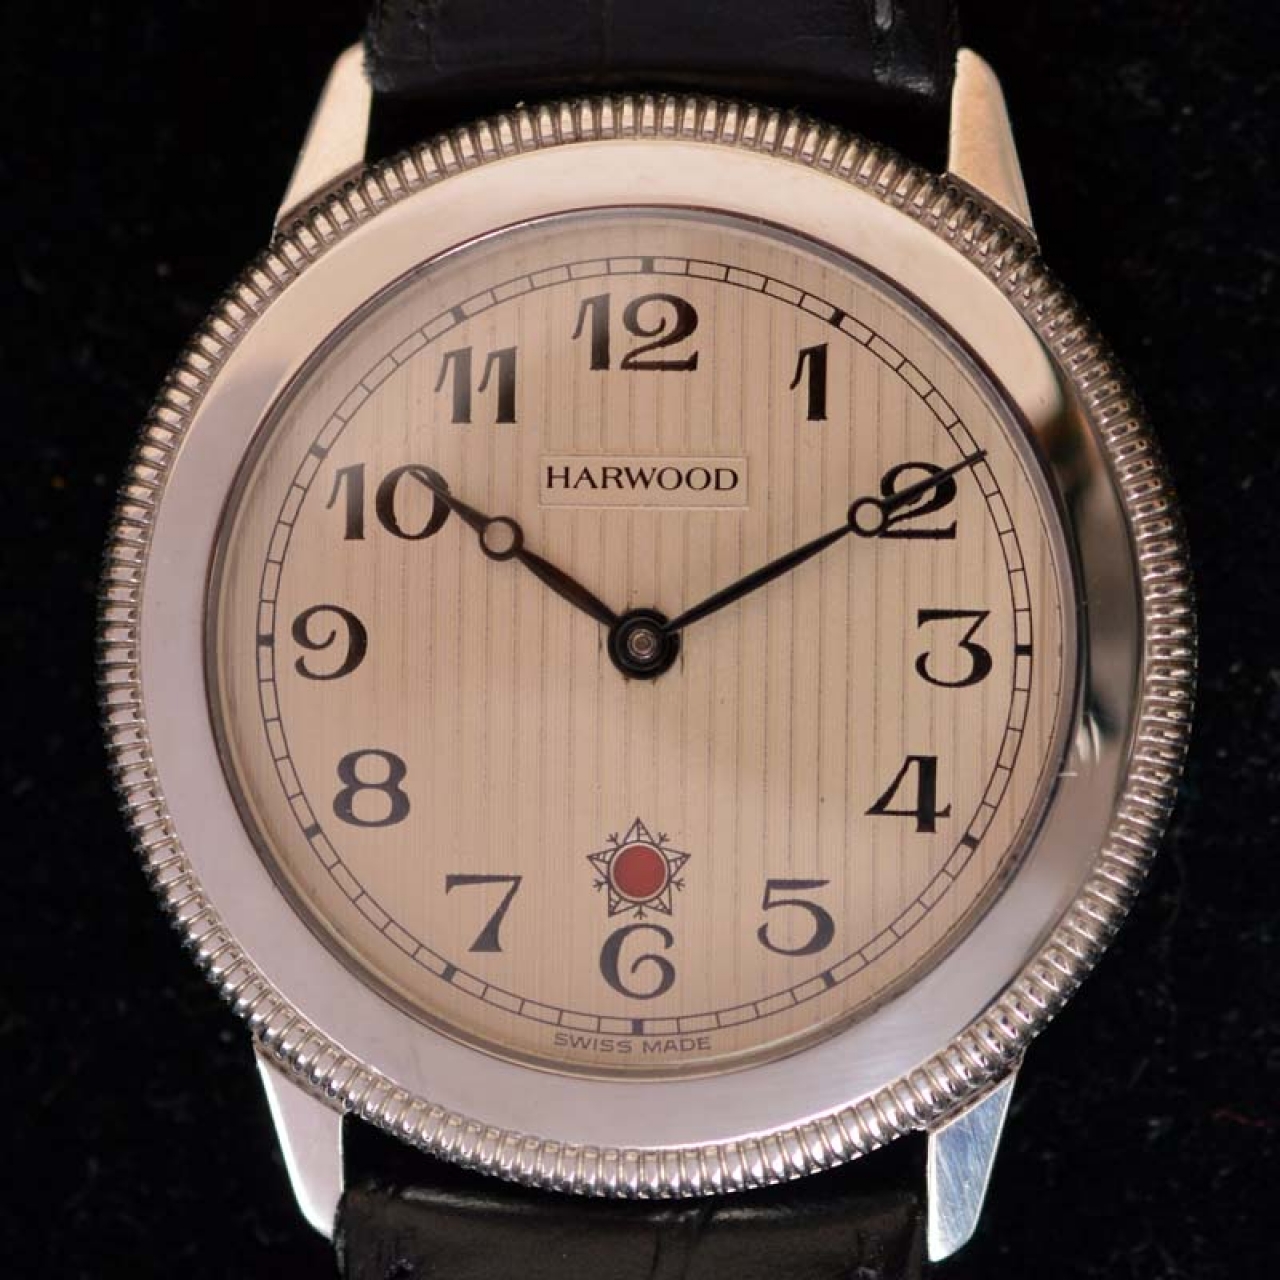 Harwood automatic wrist watch - Rocks and Clocks